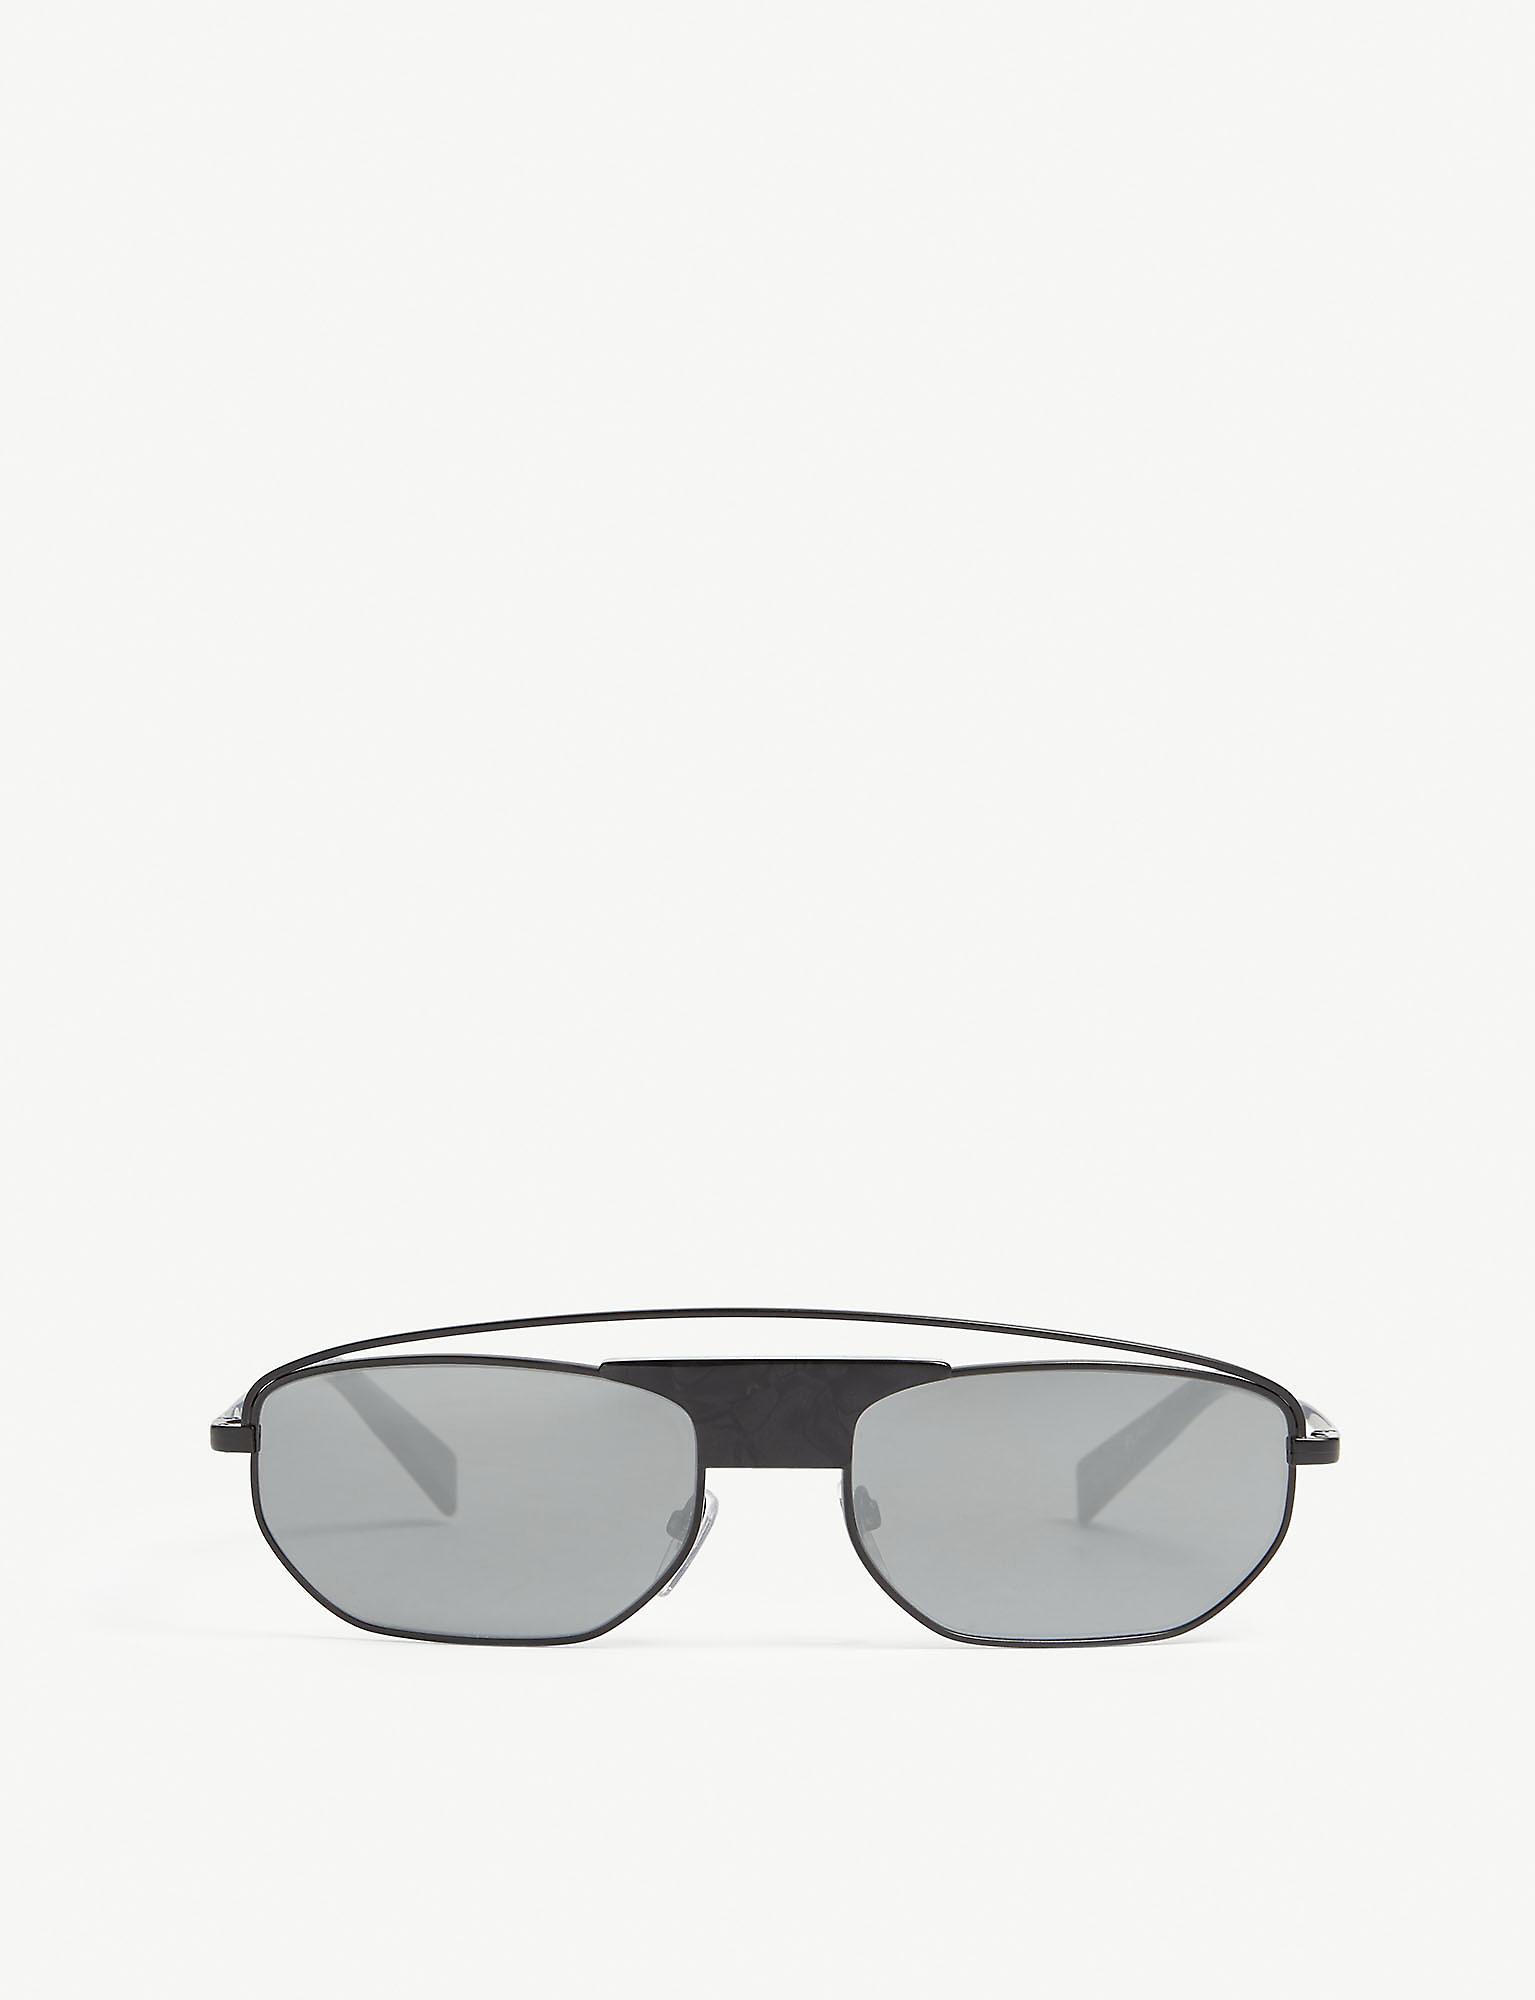 Alain Mikli A04014 Rectangle-frame Sunglasses in Black for Men - Lyst